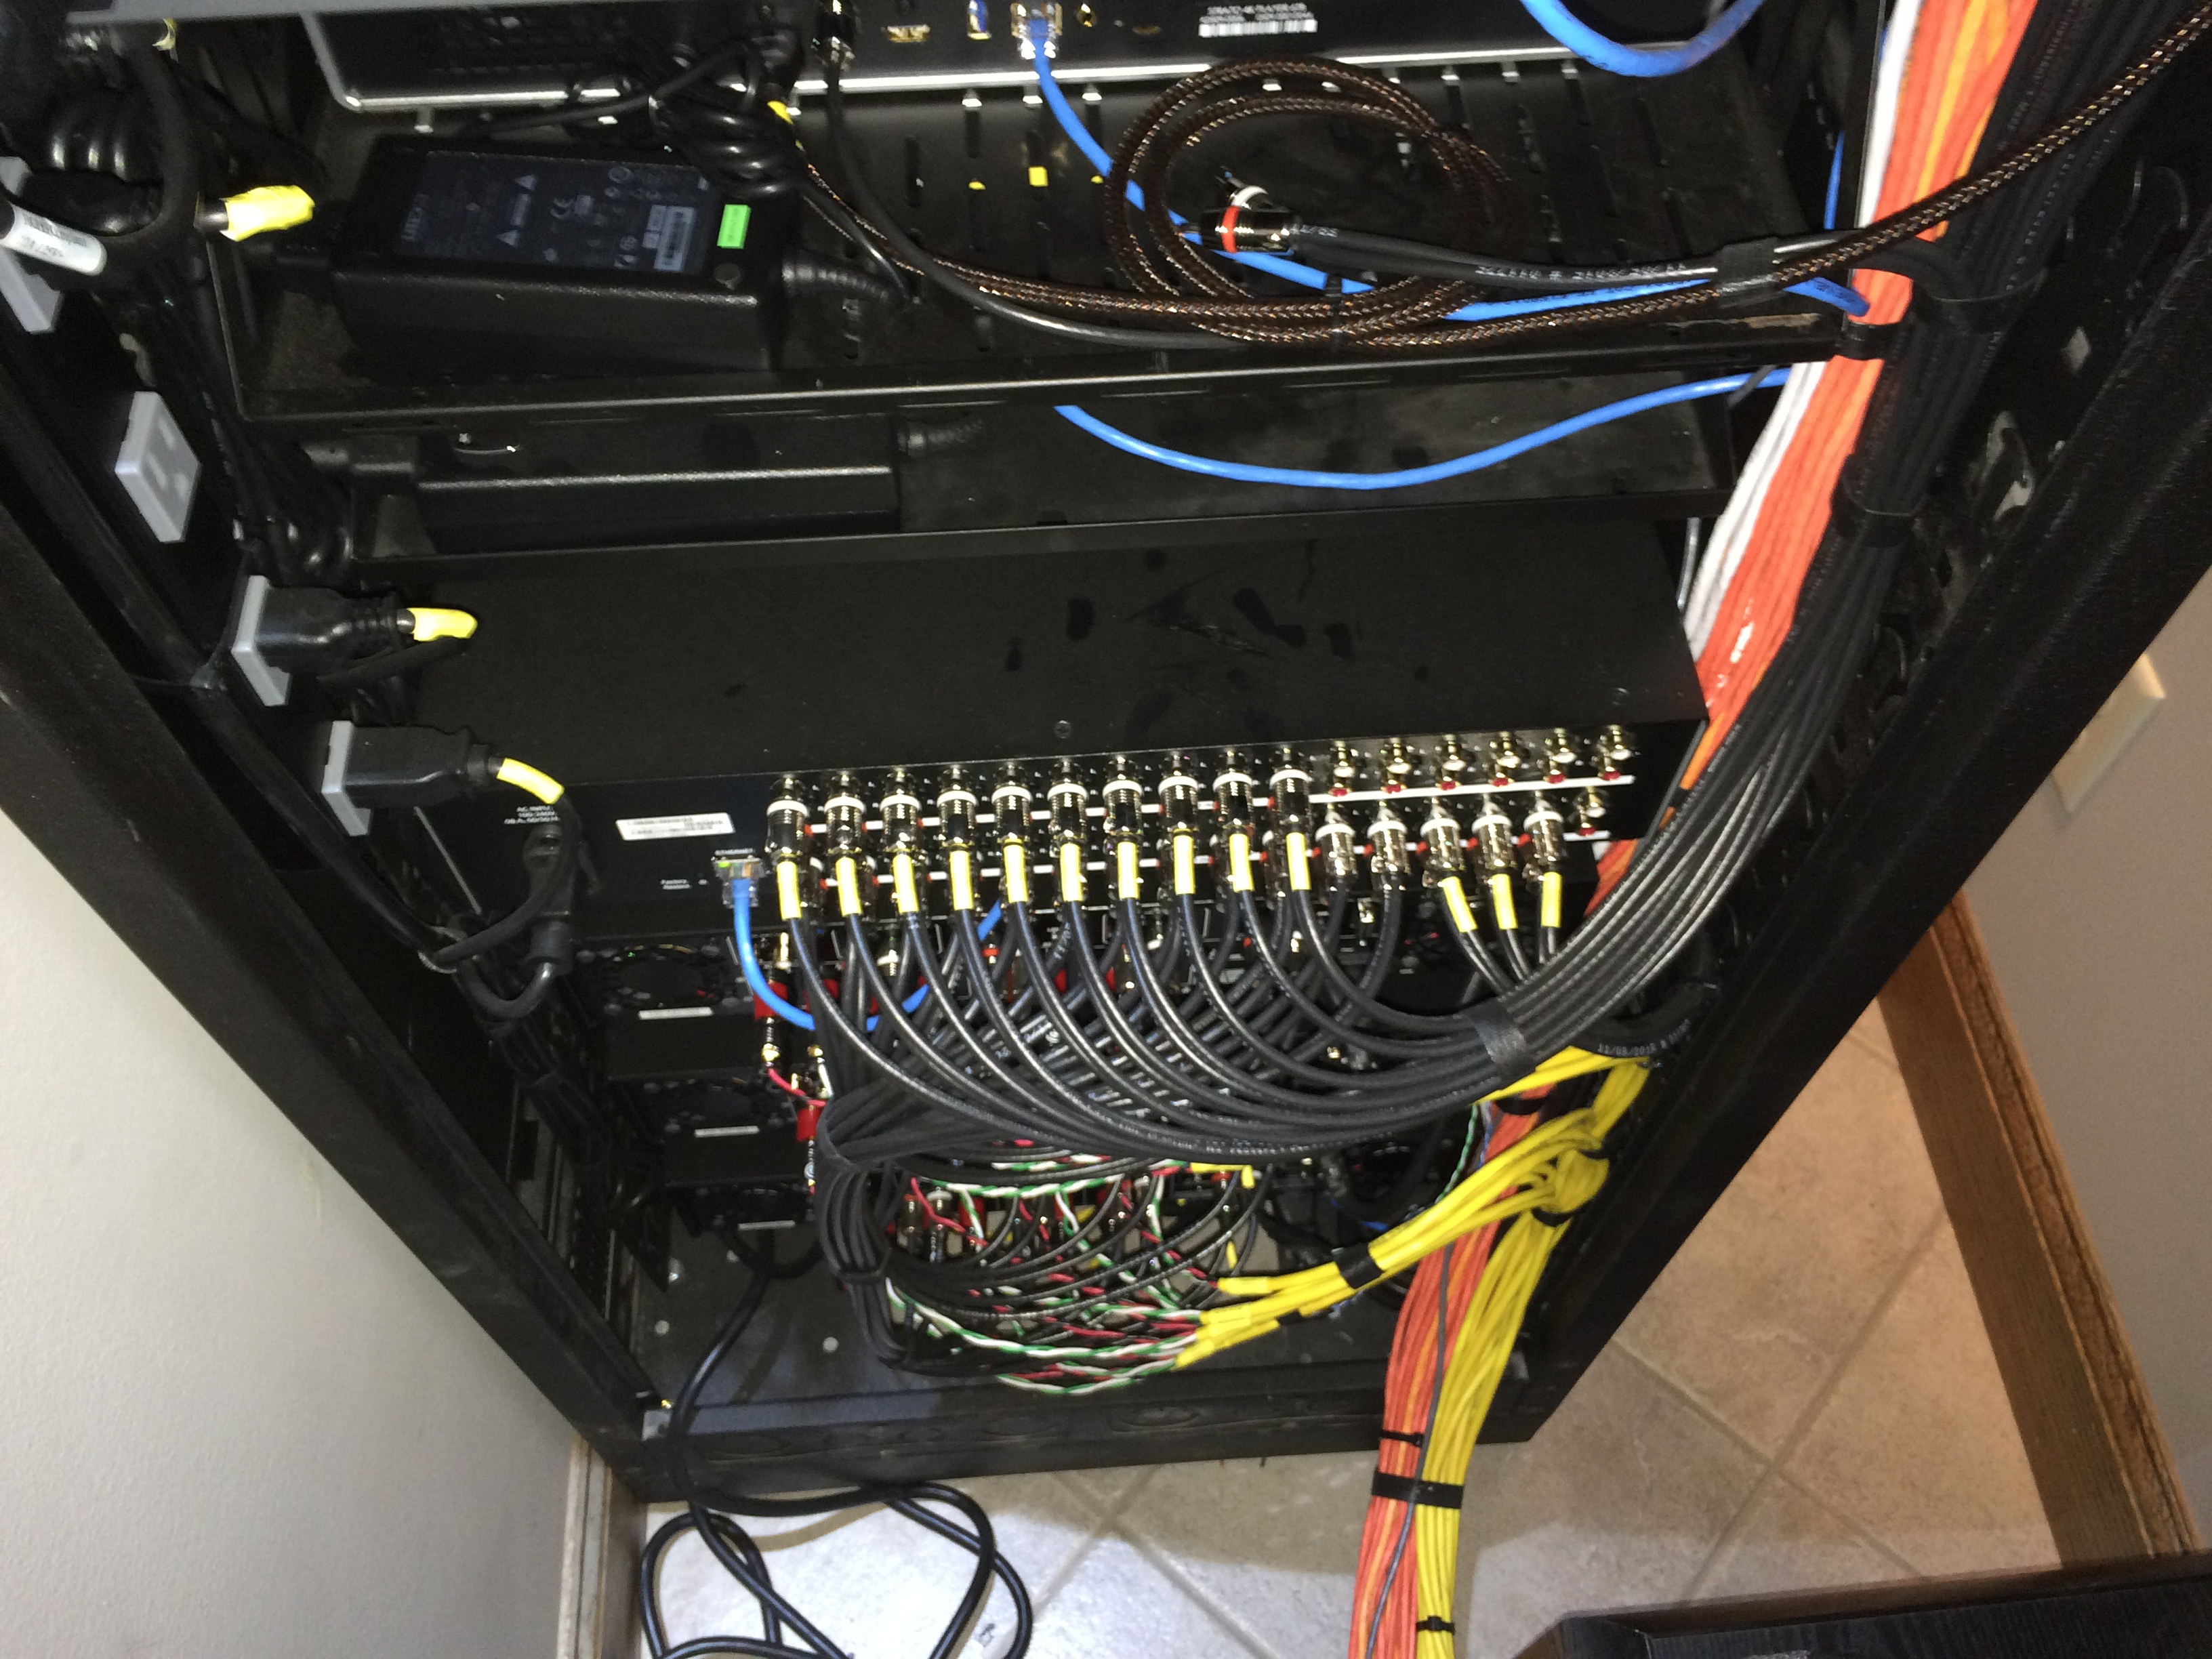 Rep reccomend installer cable